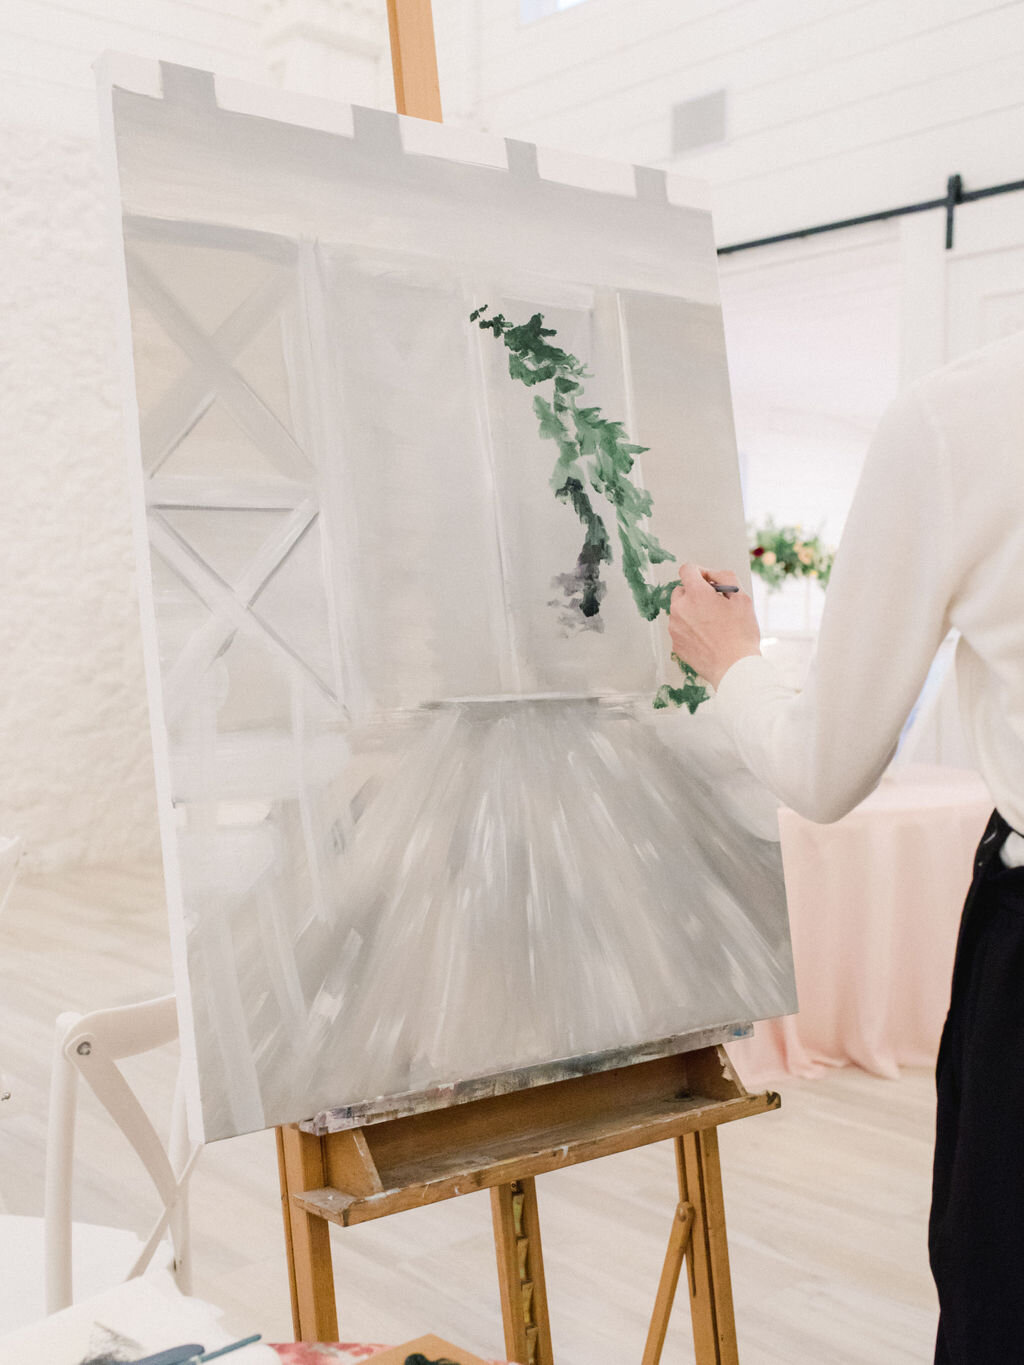 Live Painter at wedding reception